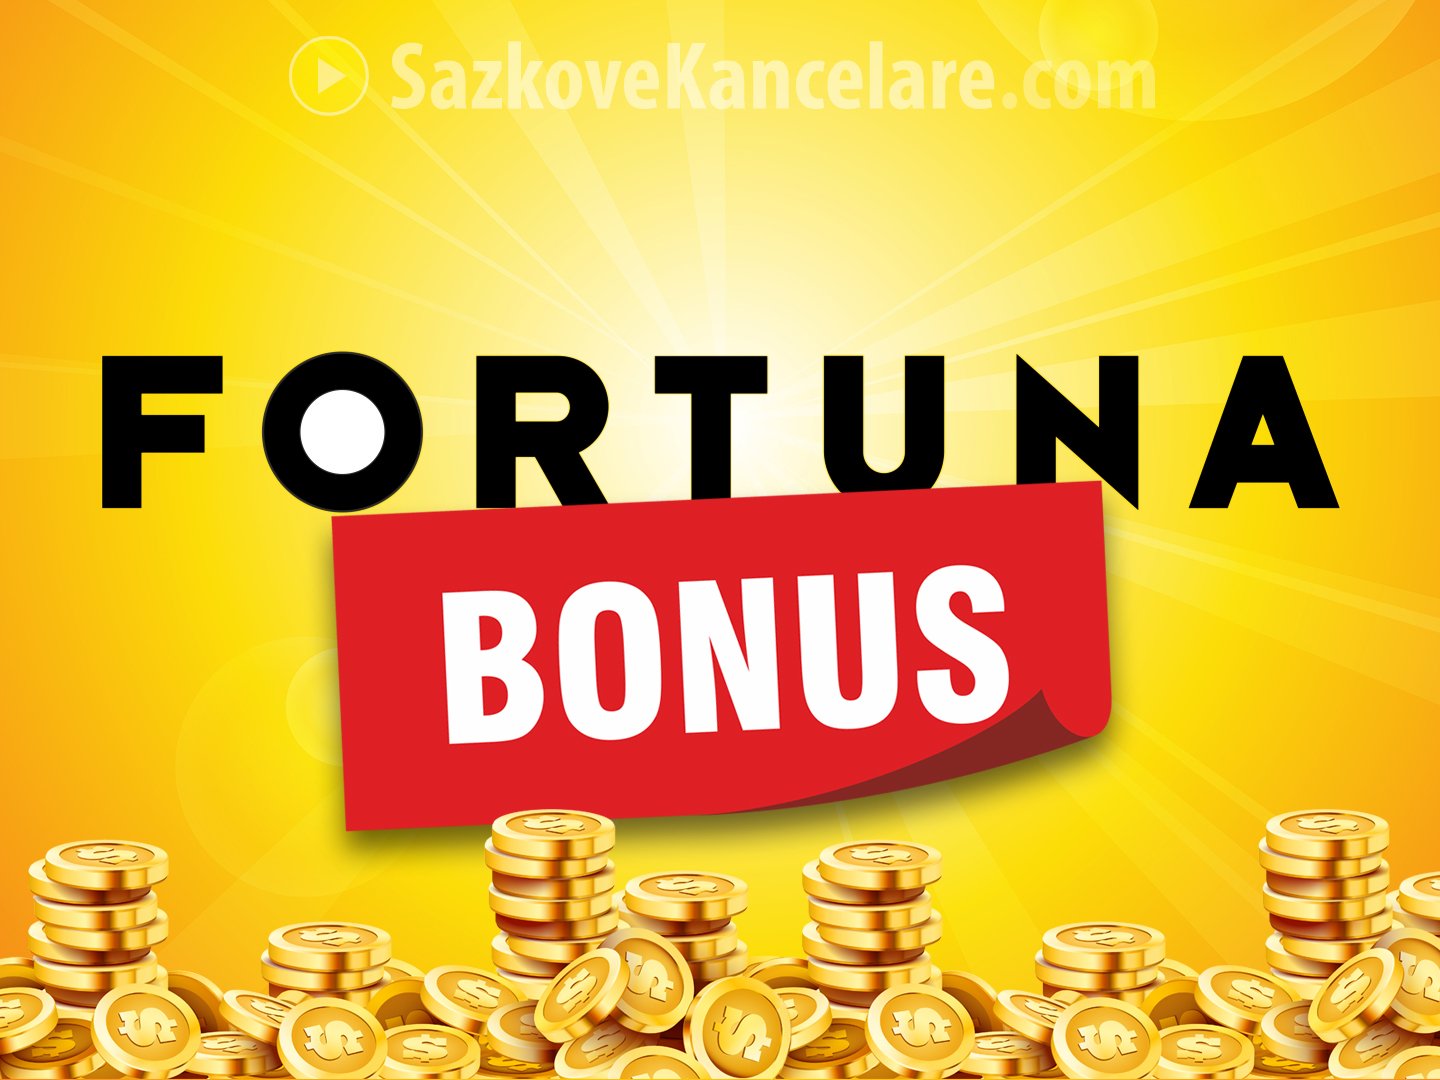 Jak získat bonus u Fortuny?